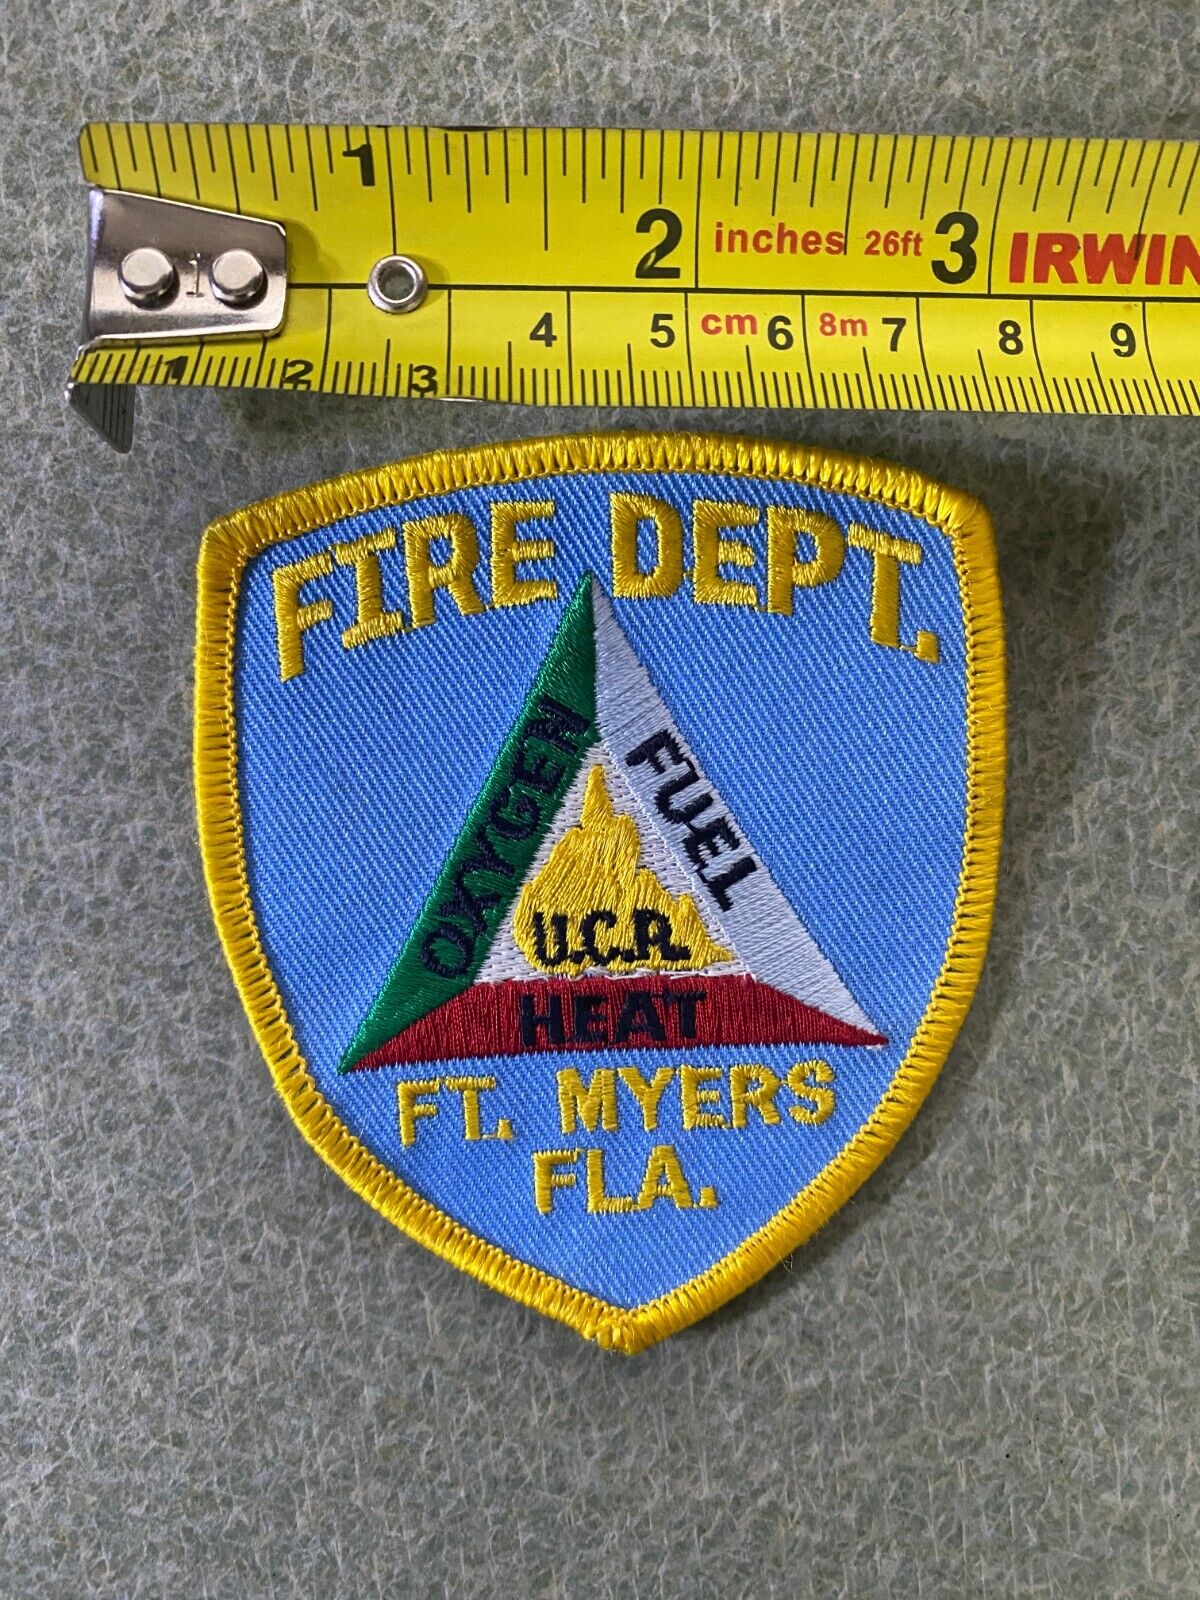 Vintage Ft. Myers FL Fire Dept. Patch